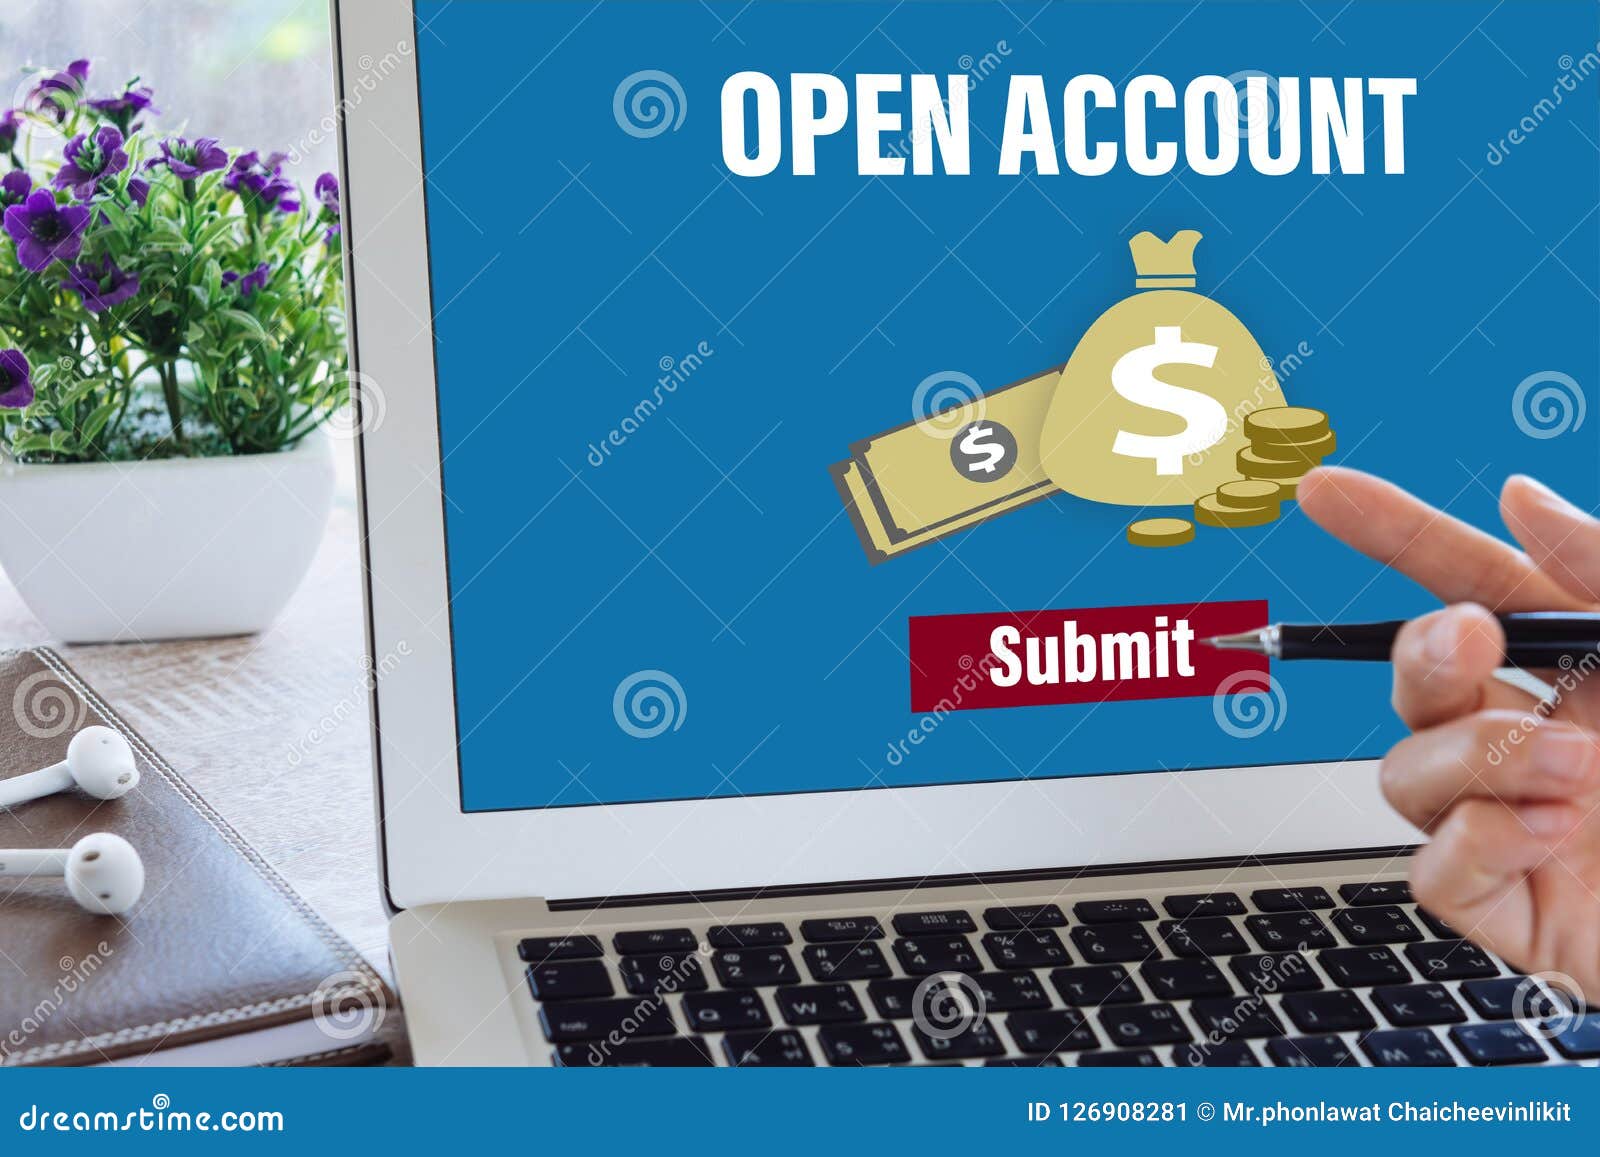 open a bank account online